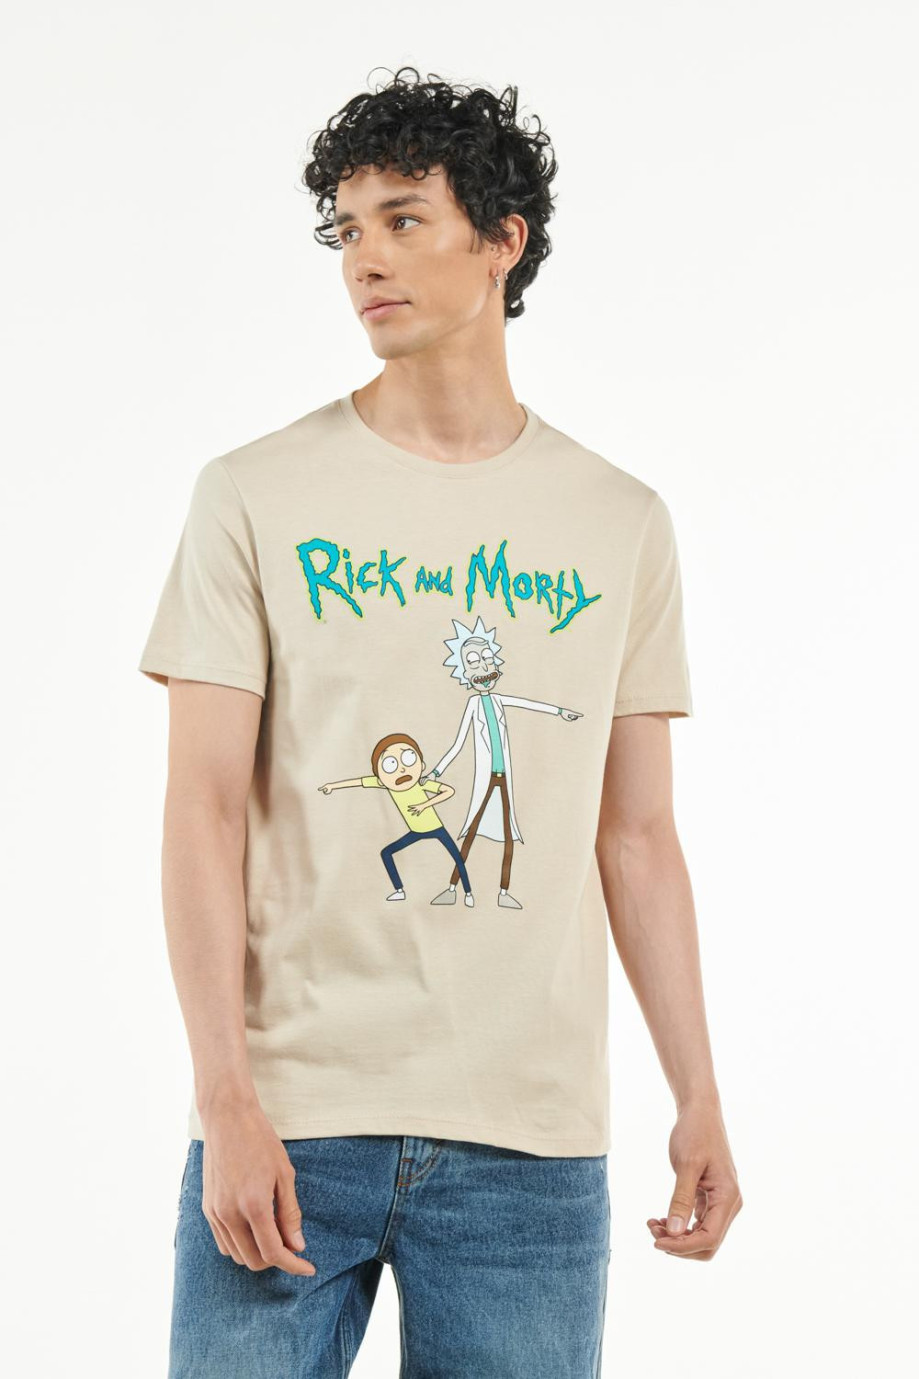 Camiseta manga corta kaky clara con estampado de Rick and Morty